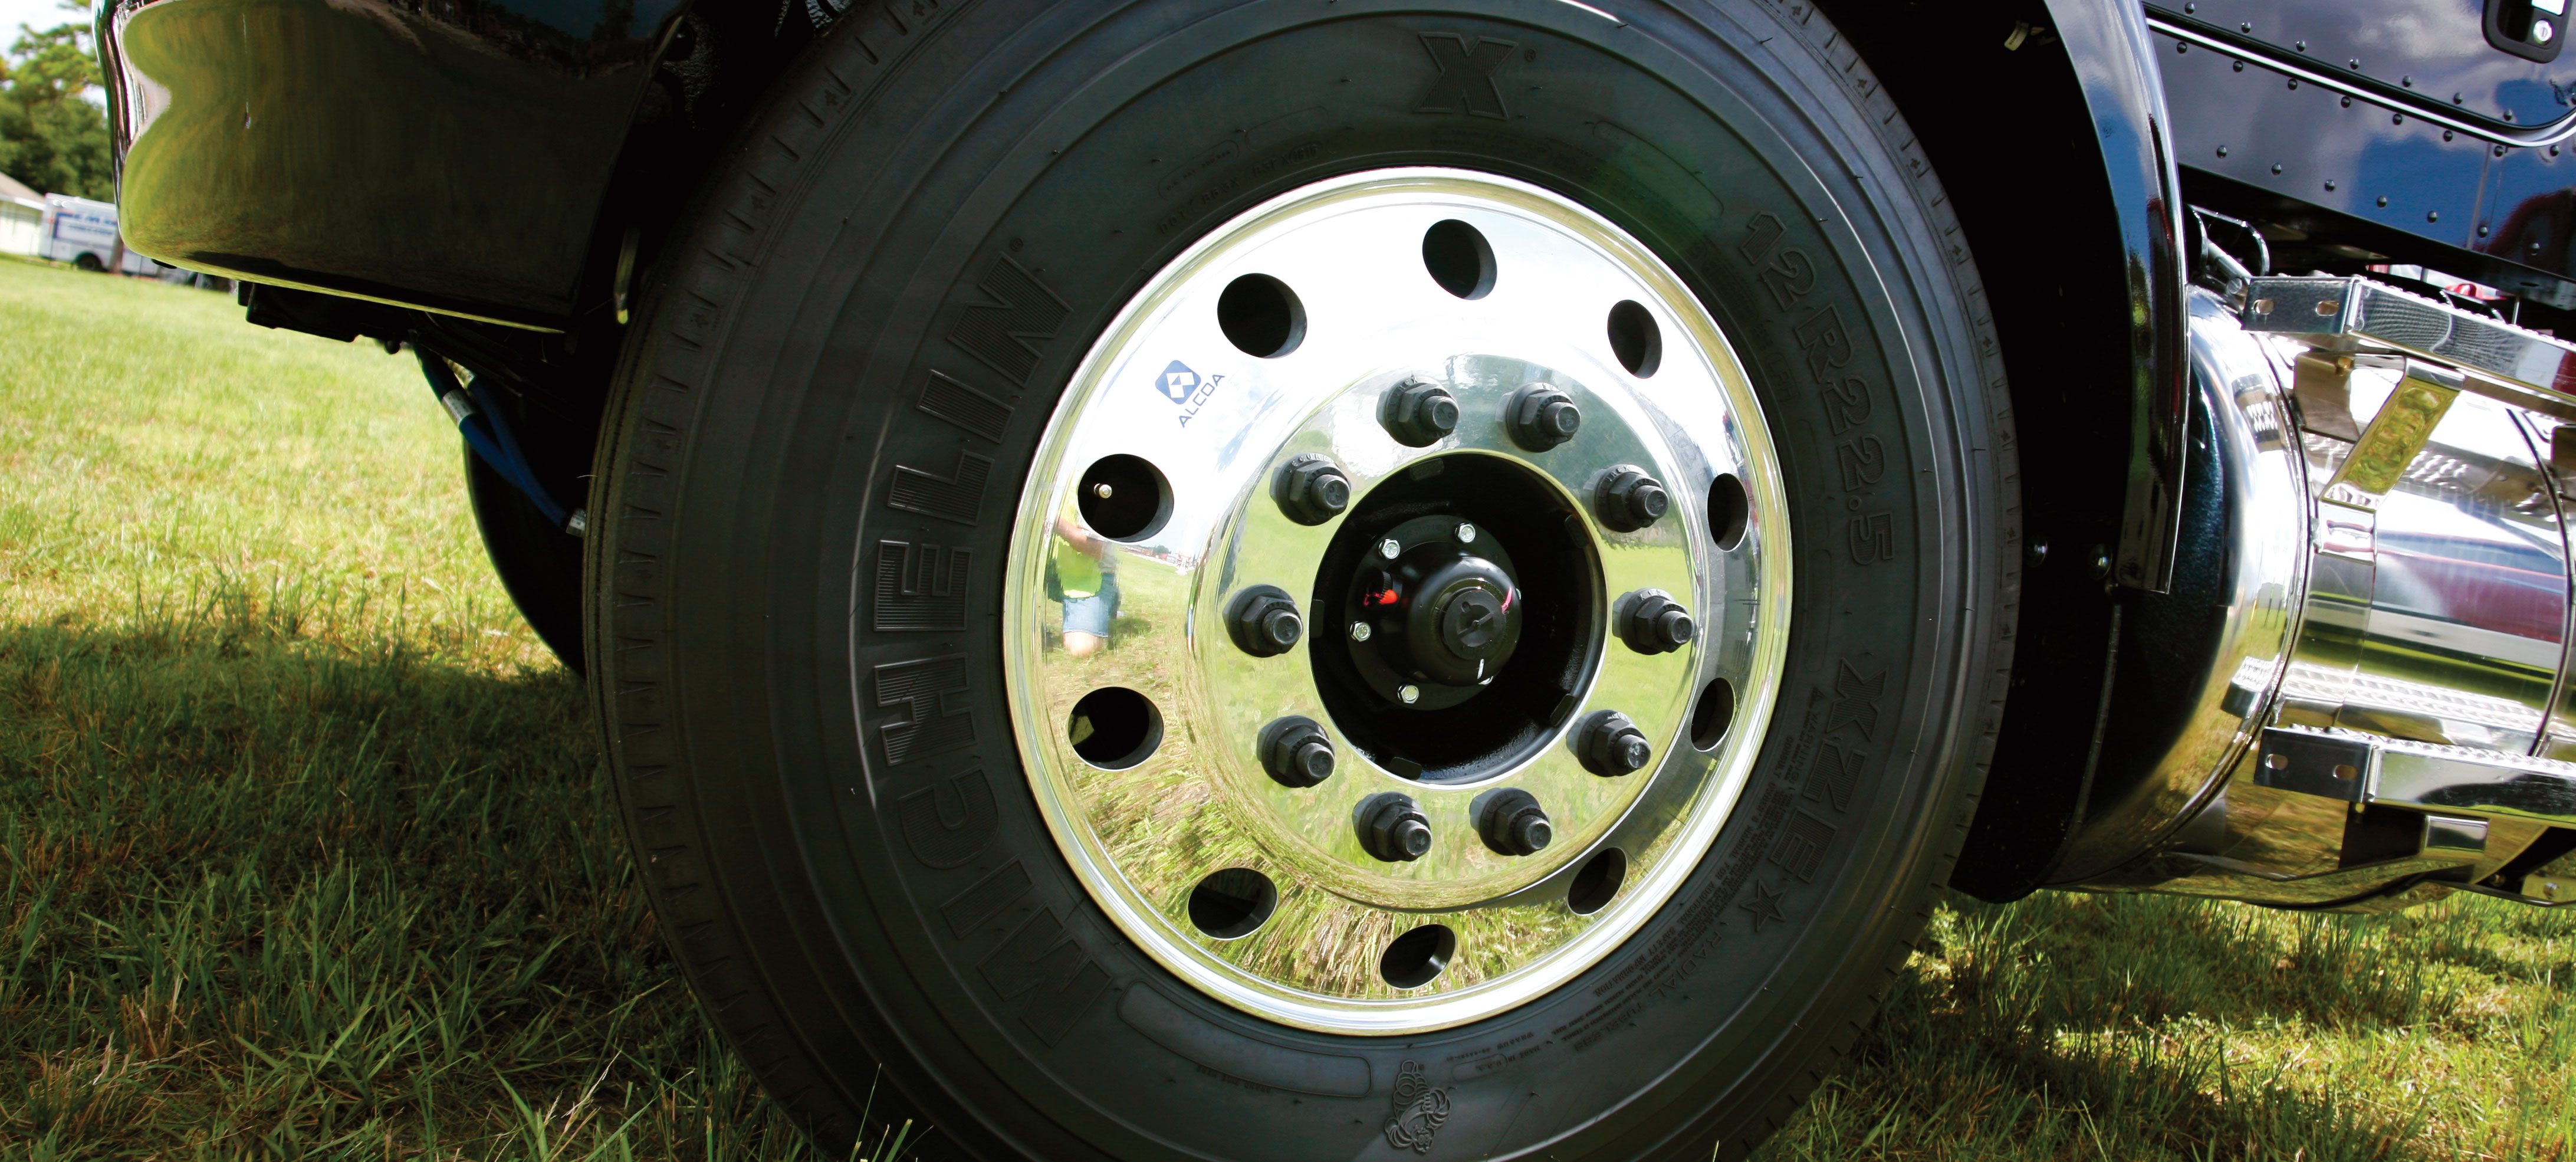 Pierce Peterbilt Commercial Fire Truck Chassis Aluminum Wheels